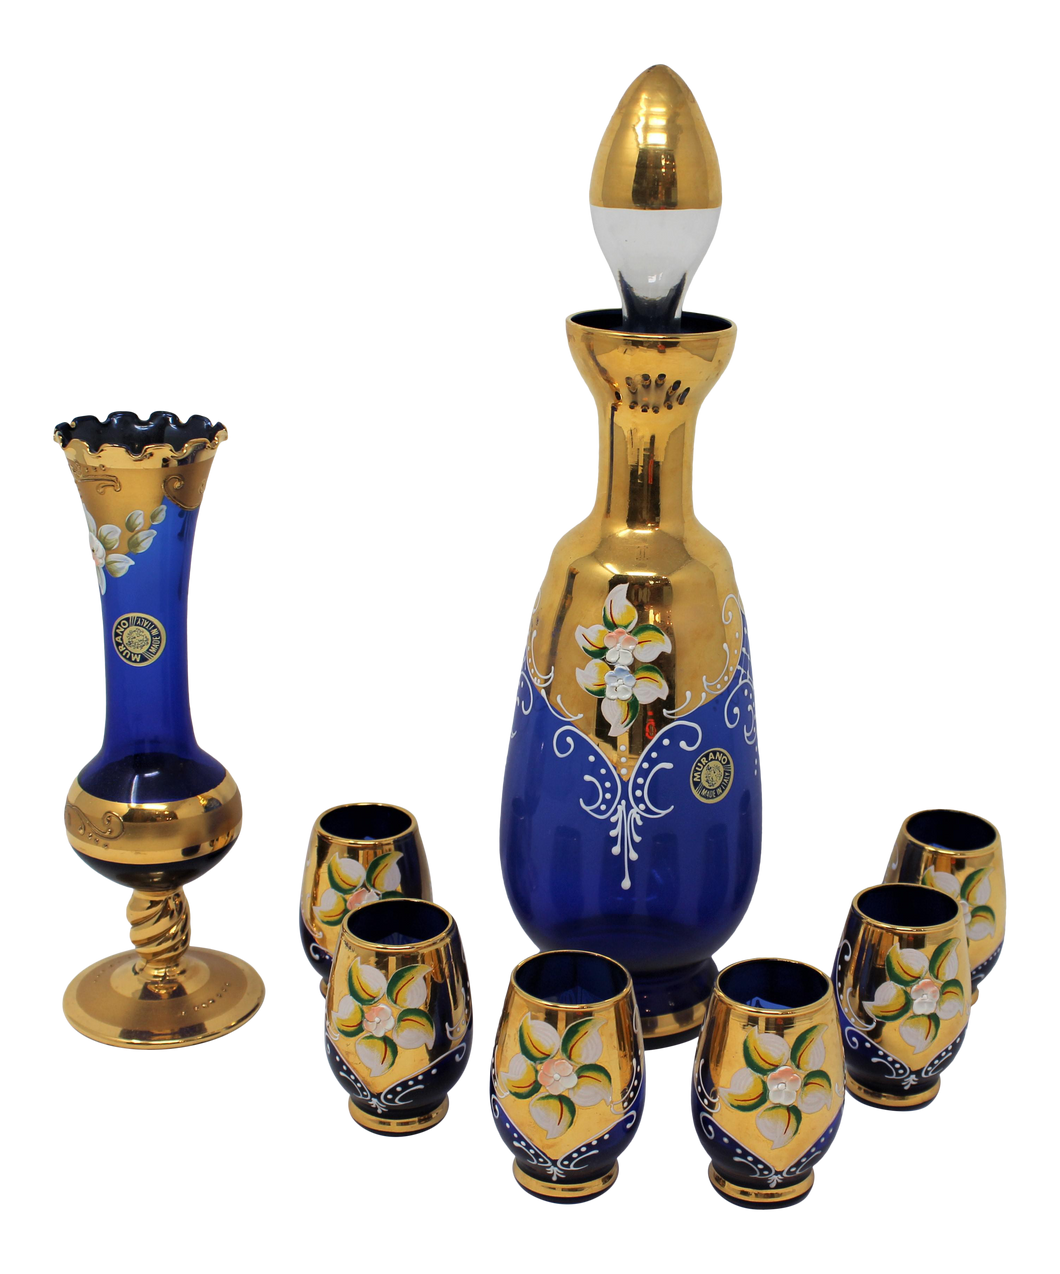 Vintage Venetian Glassware Set - 8 Piece Set